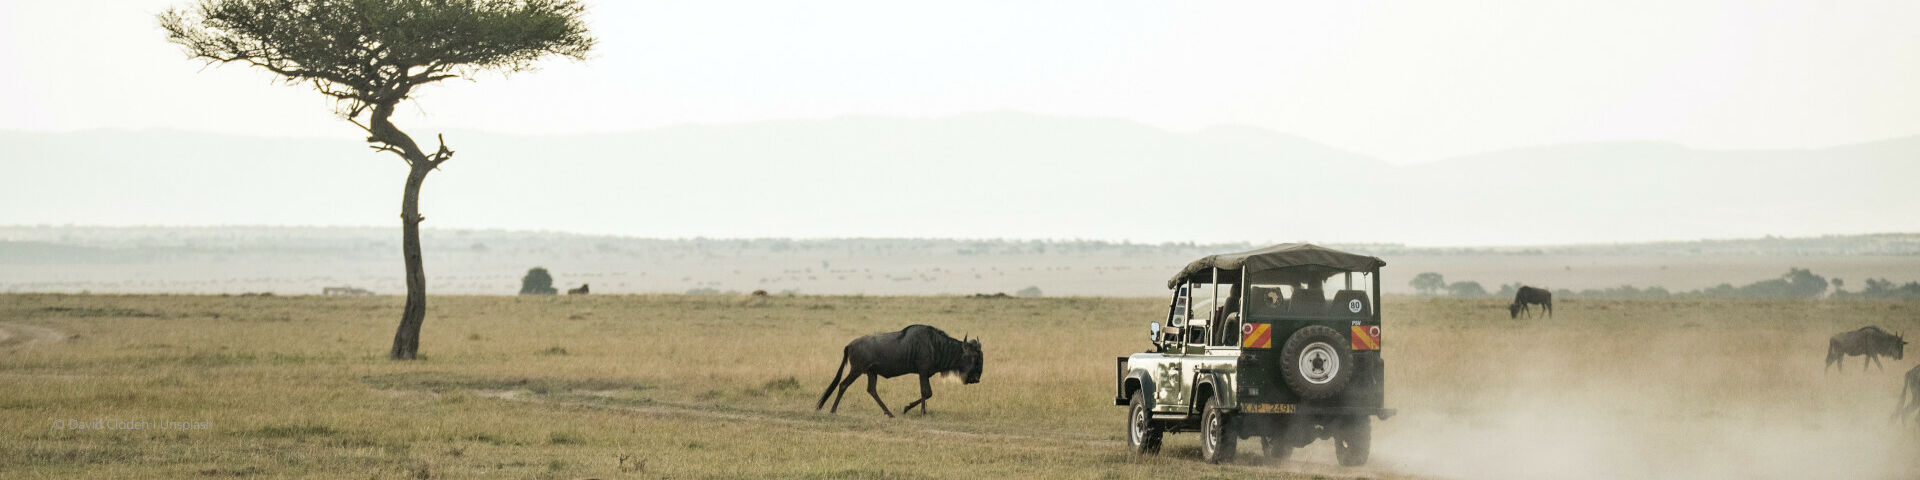 Banner How to Choose the Best Safari Destination Masai Mara game drive David Clodeh